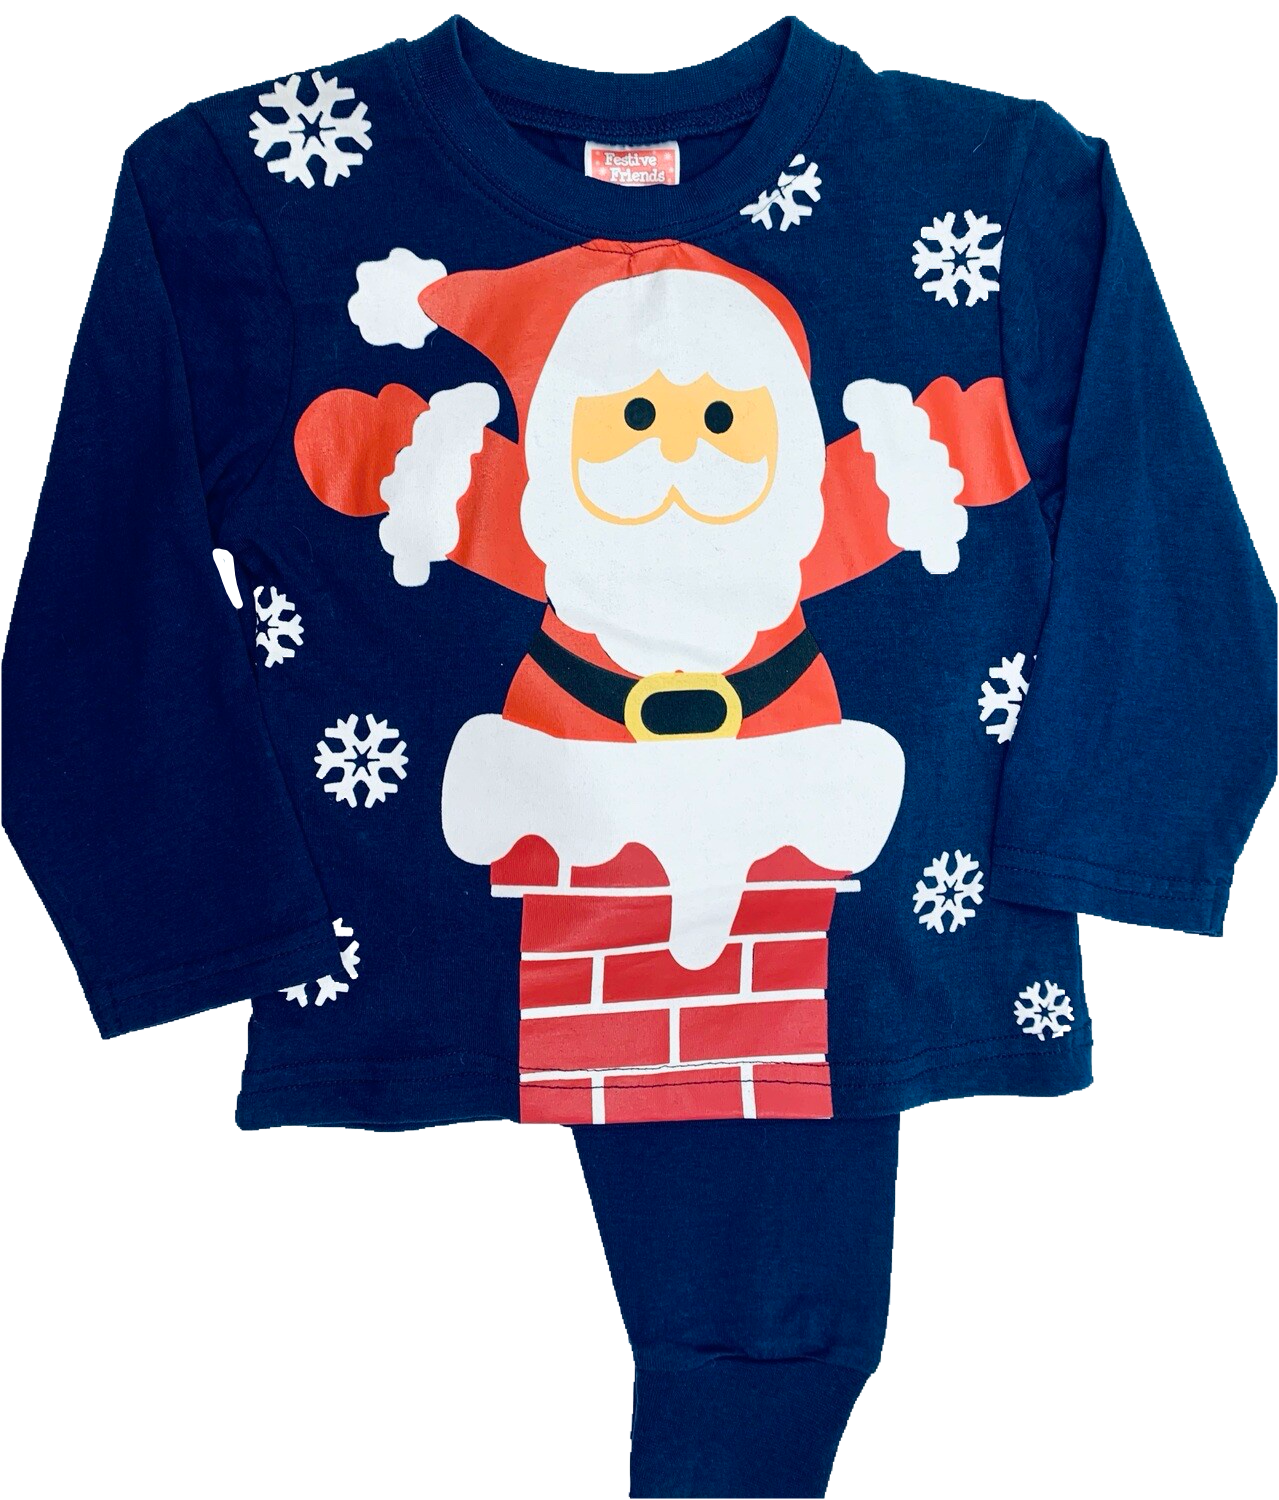 Personalised Navy Santa pyjamas